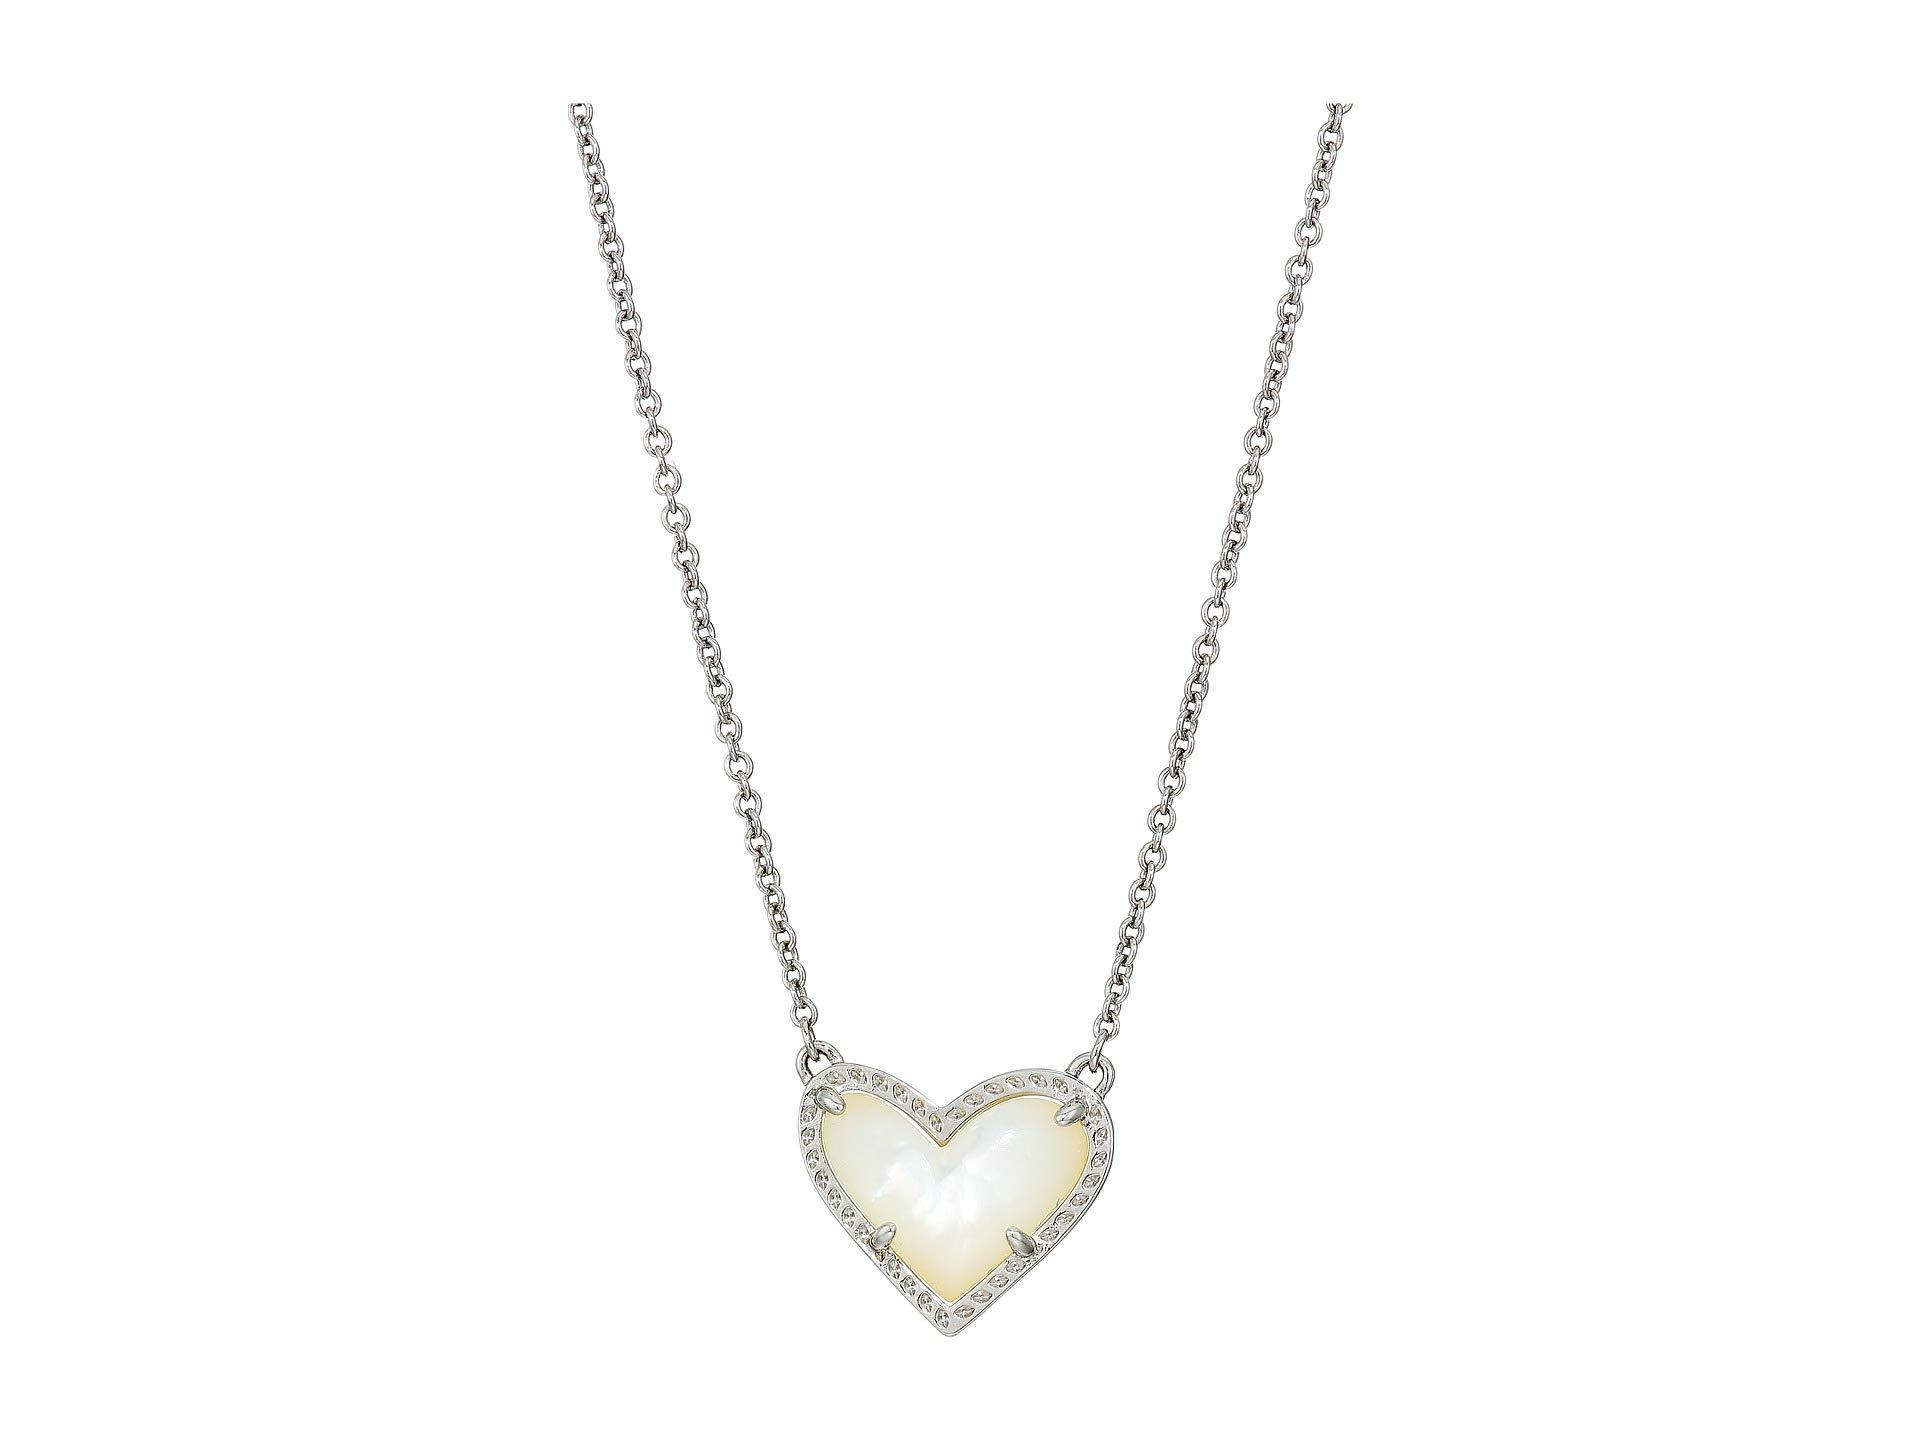 Kendra Scott Ari Heart Short Pendant Necklace in Silver (Metallic) - Lyst